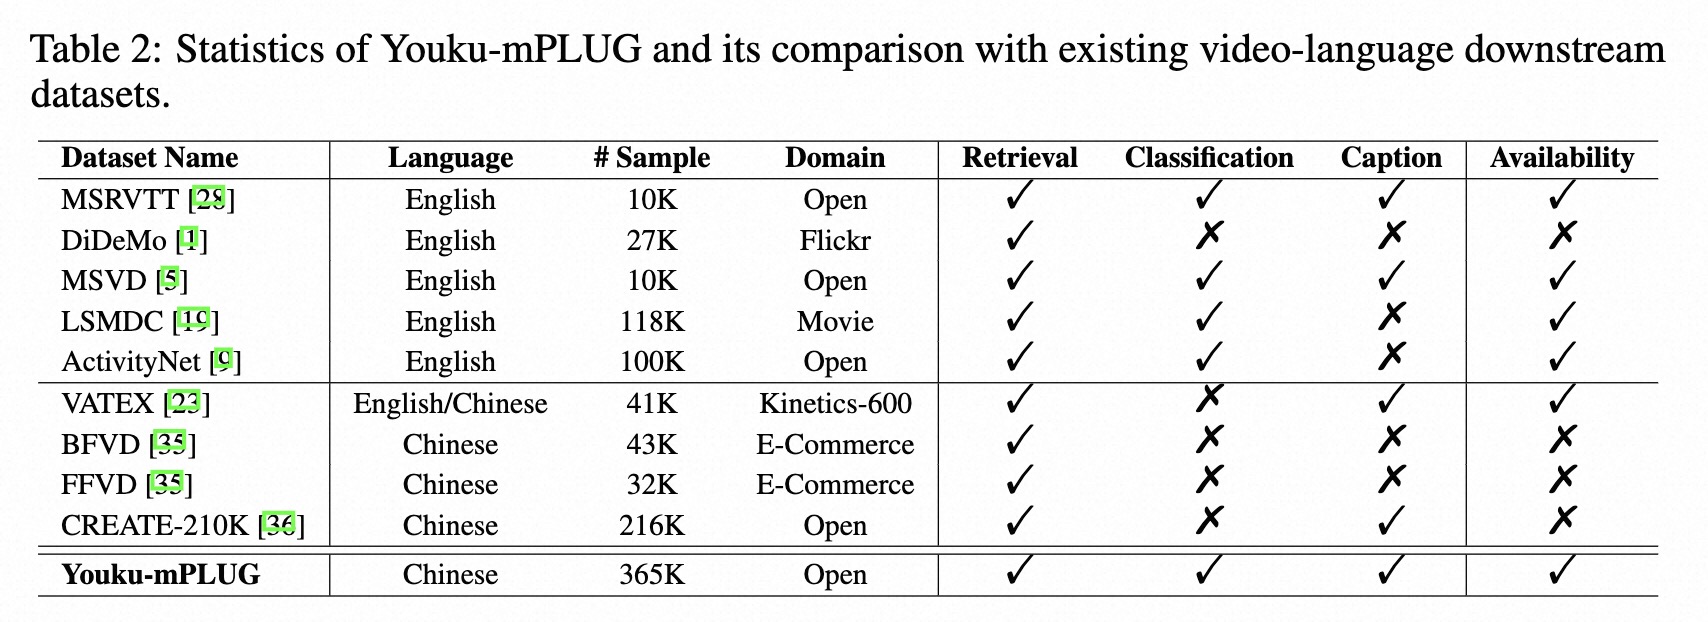 examples for youku-mplug downstream dataset